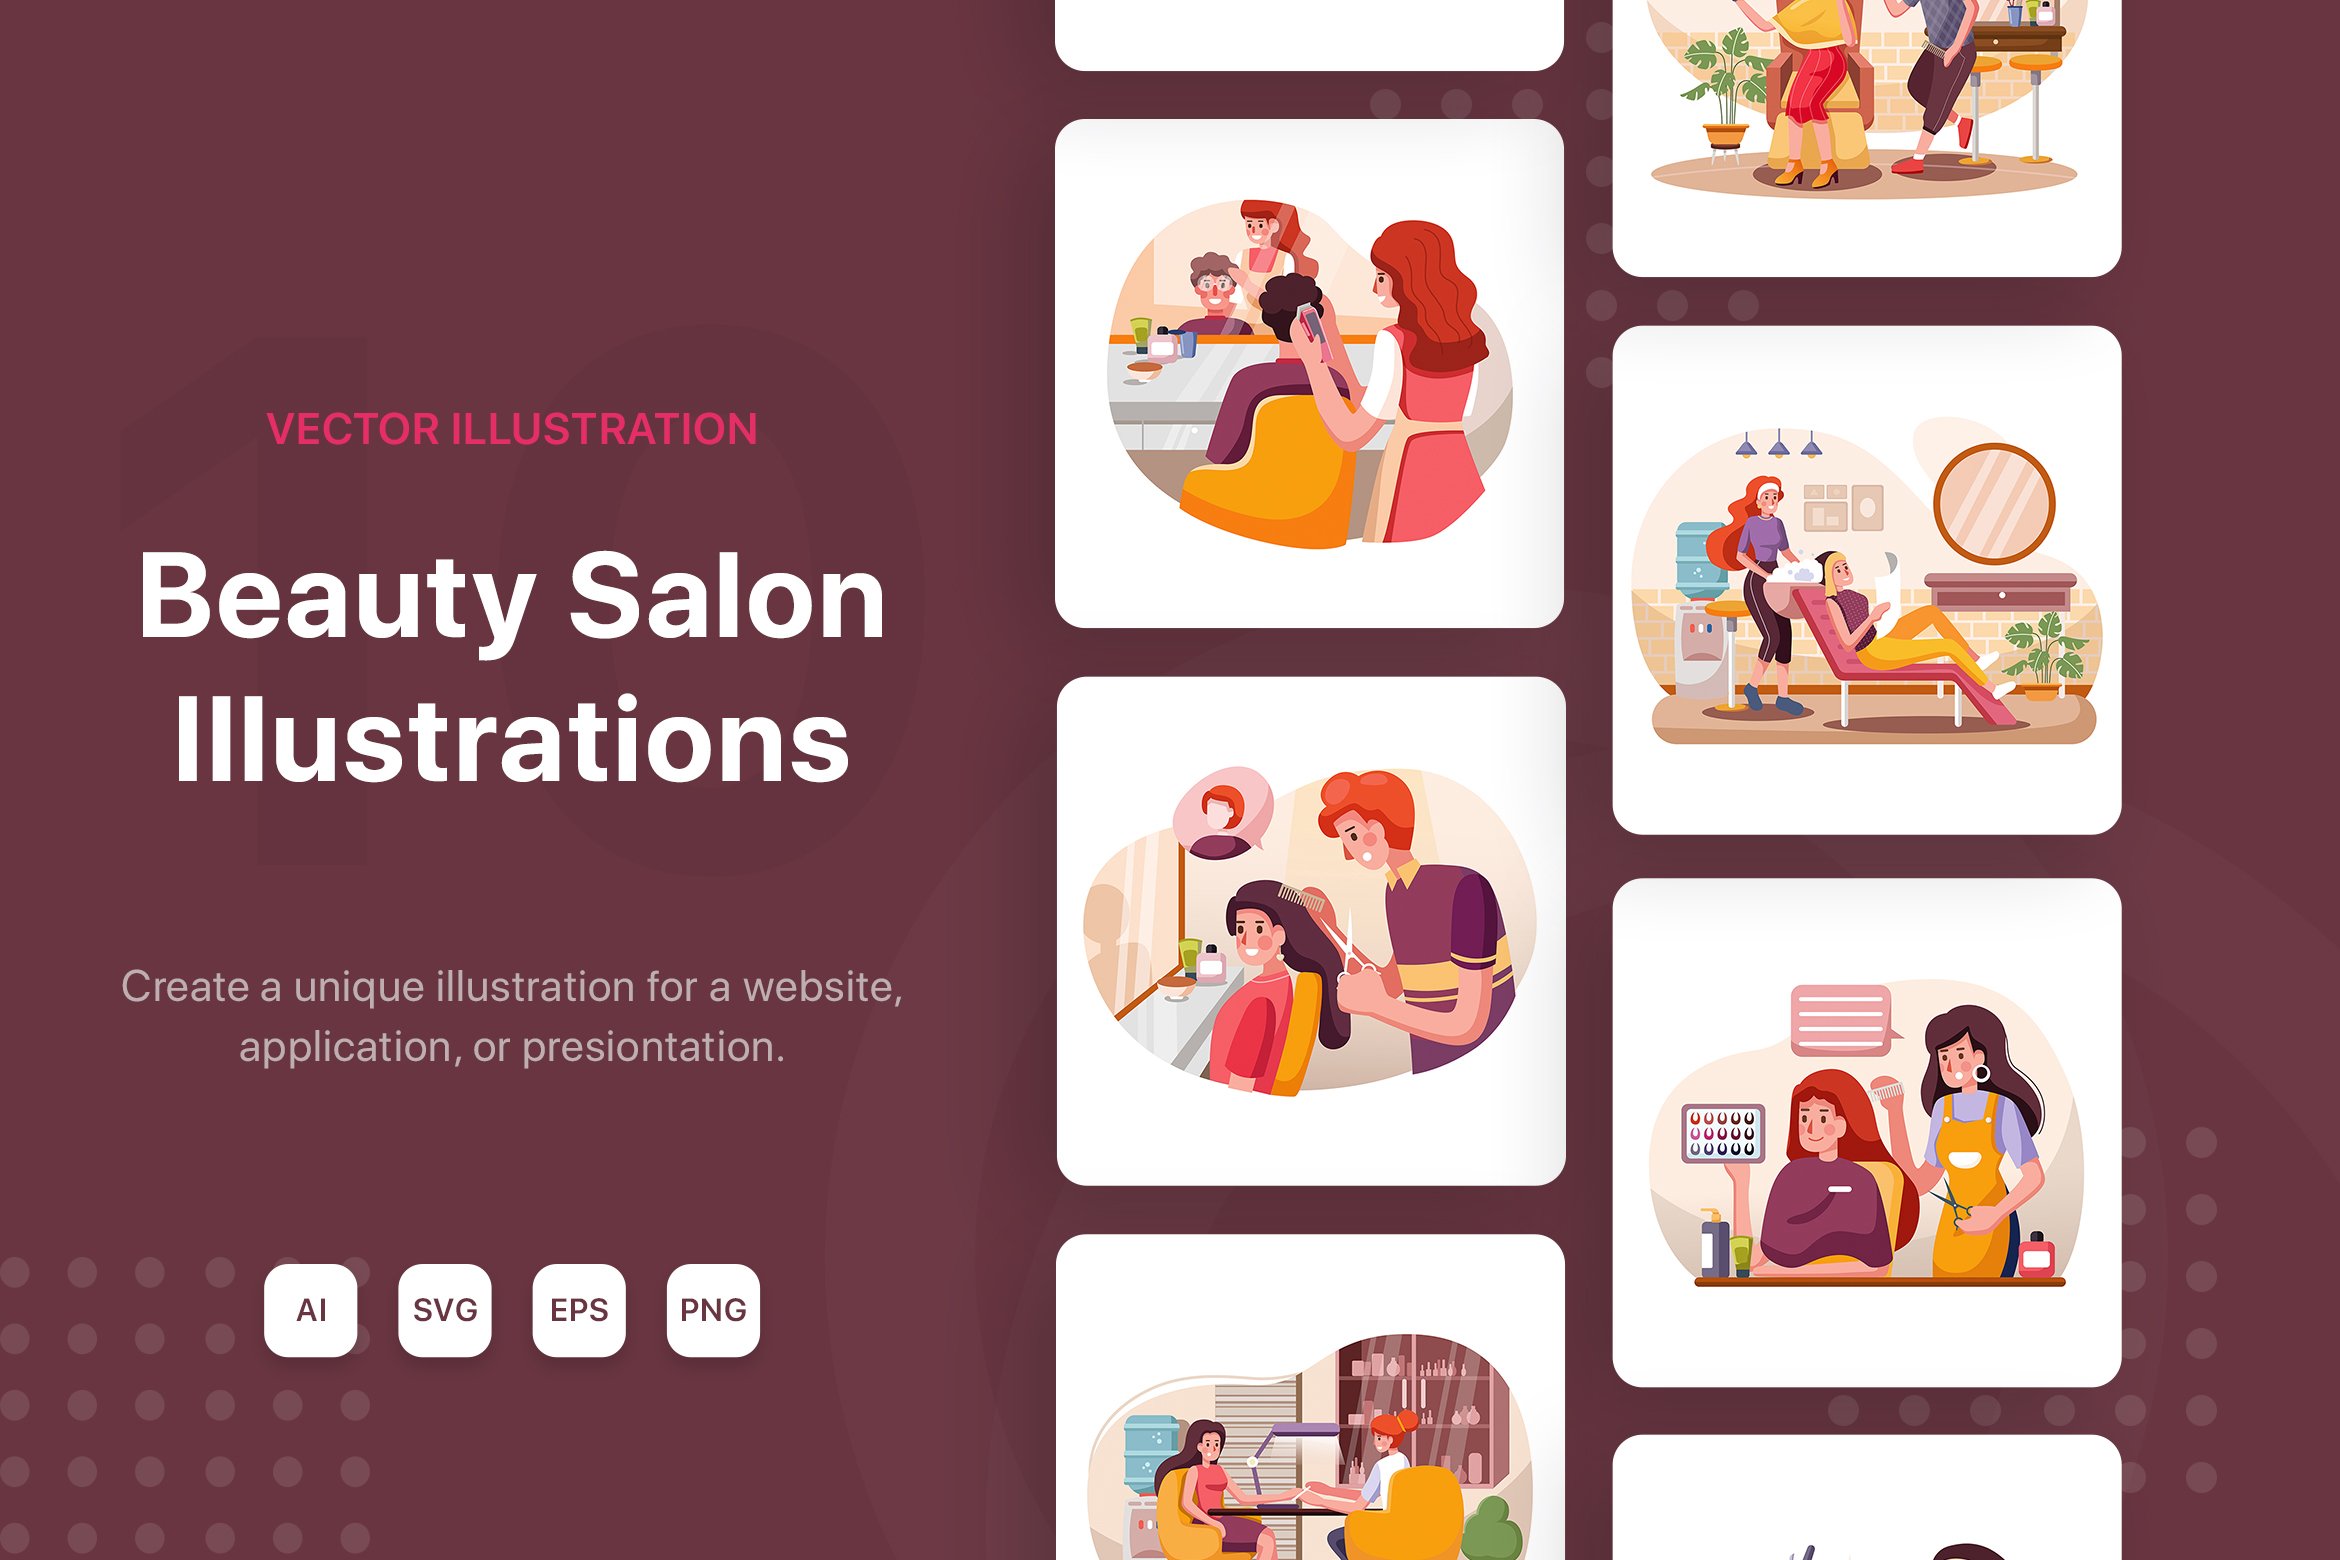 M116_Beauty Salon Illustrations cover image.